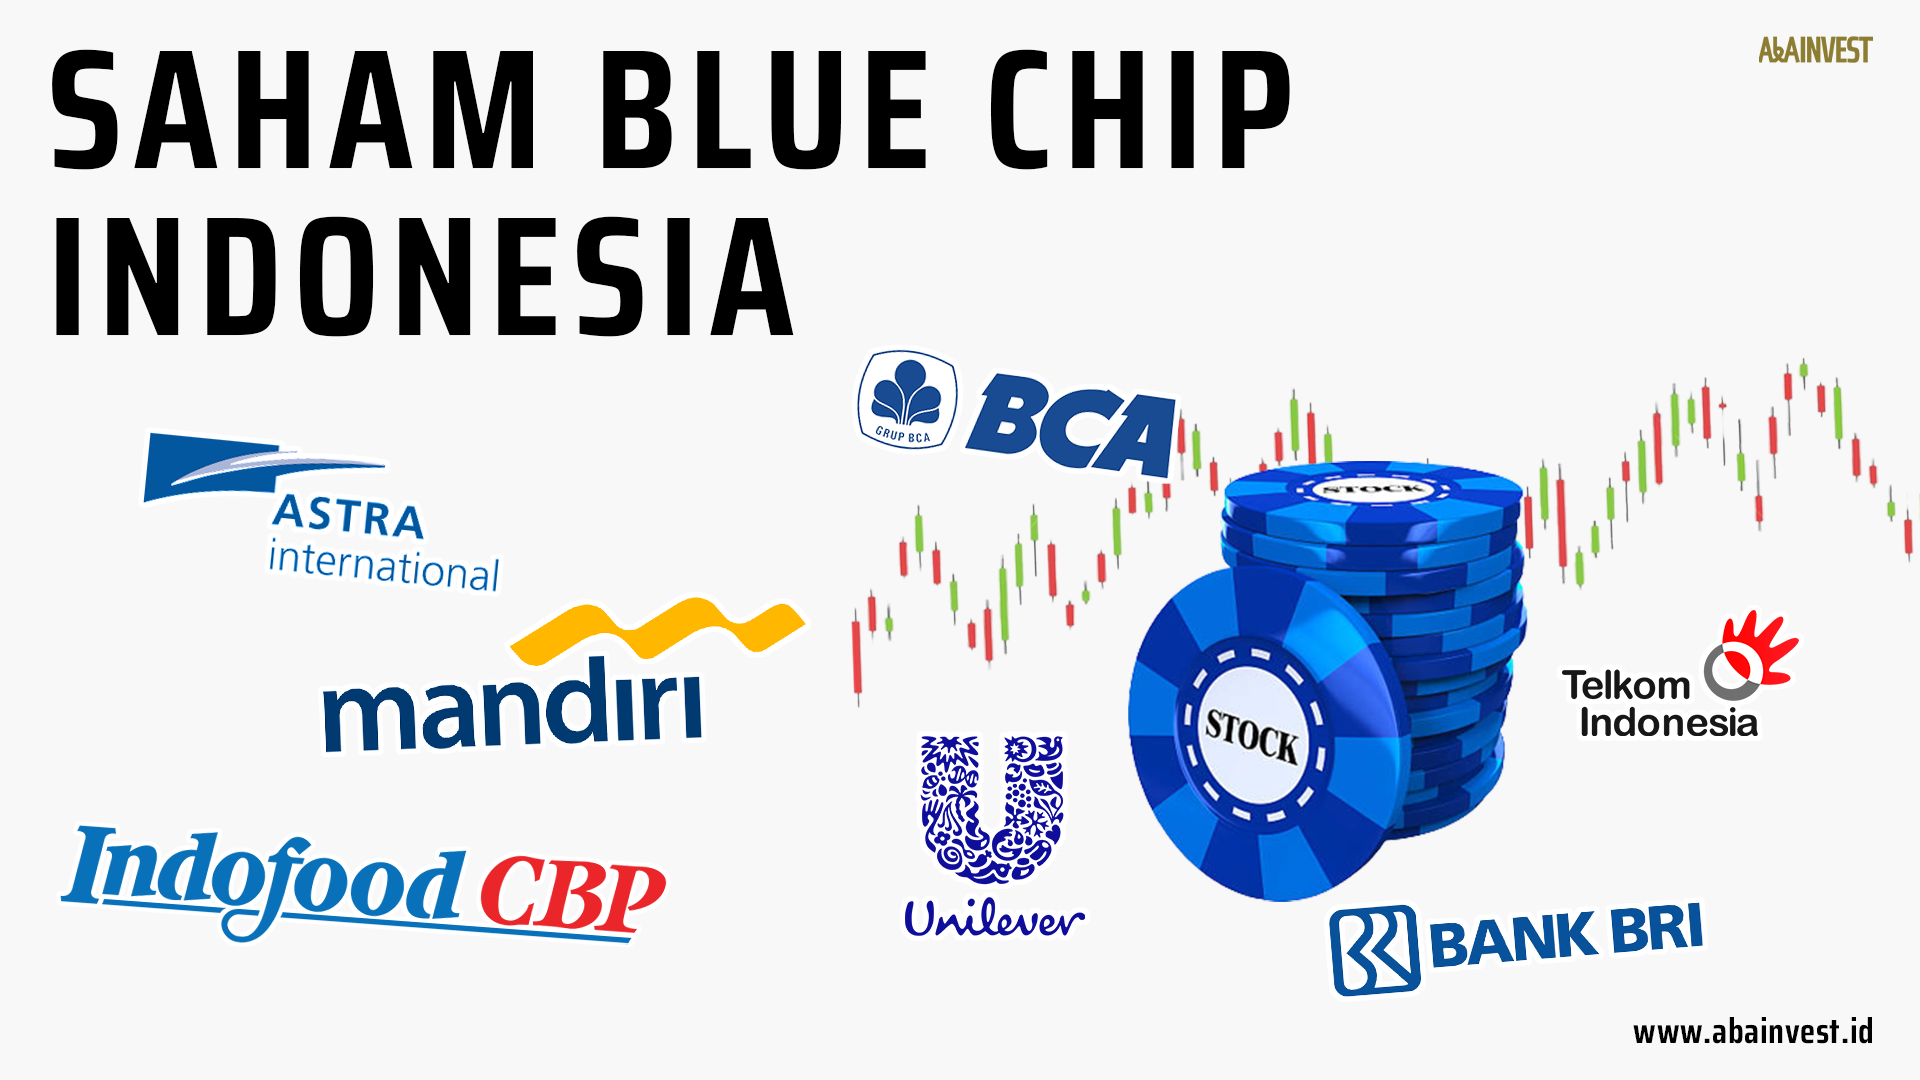 Saham bluechip indonesia